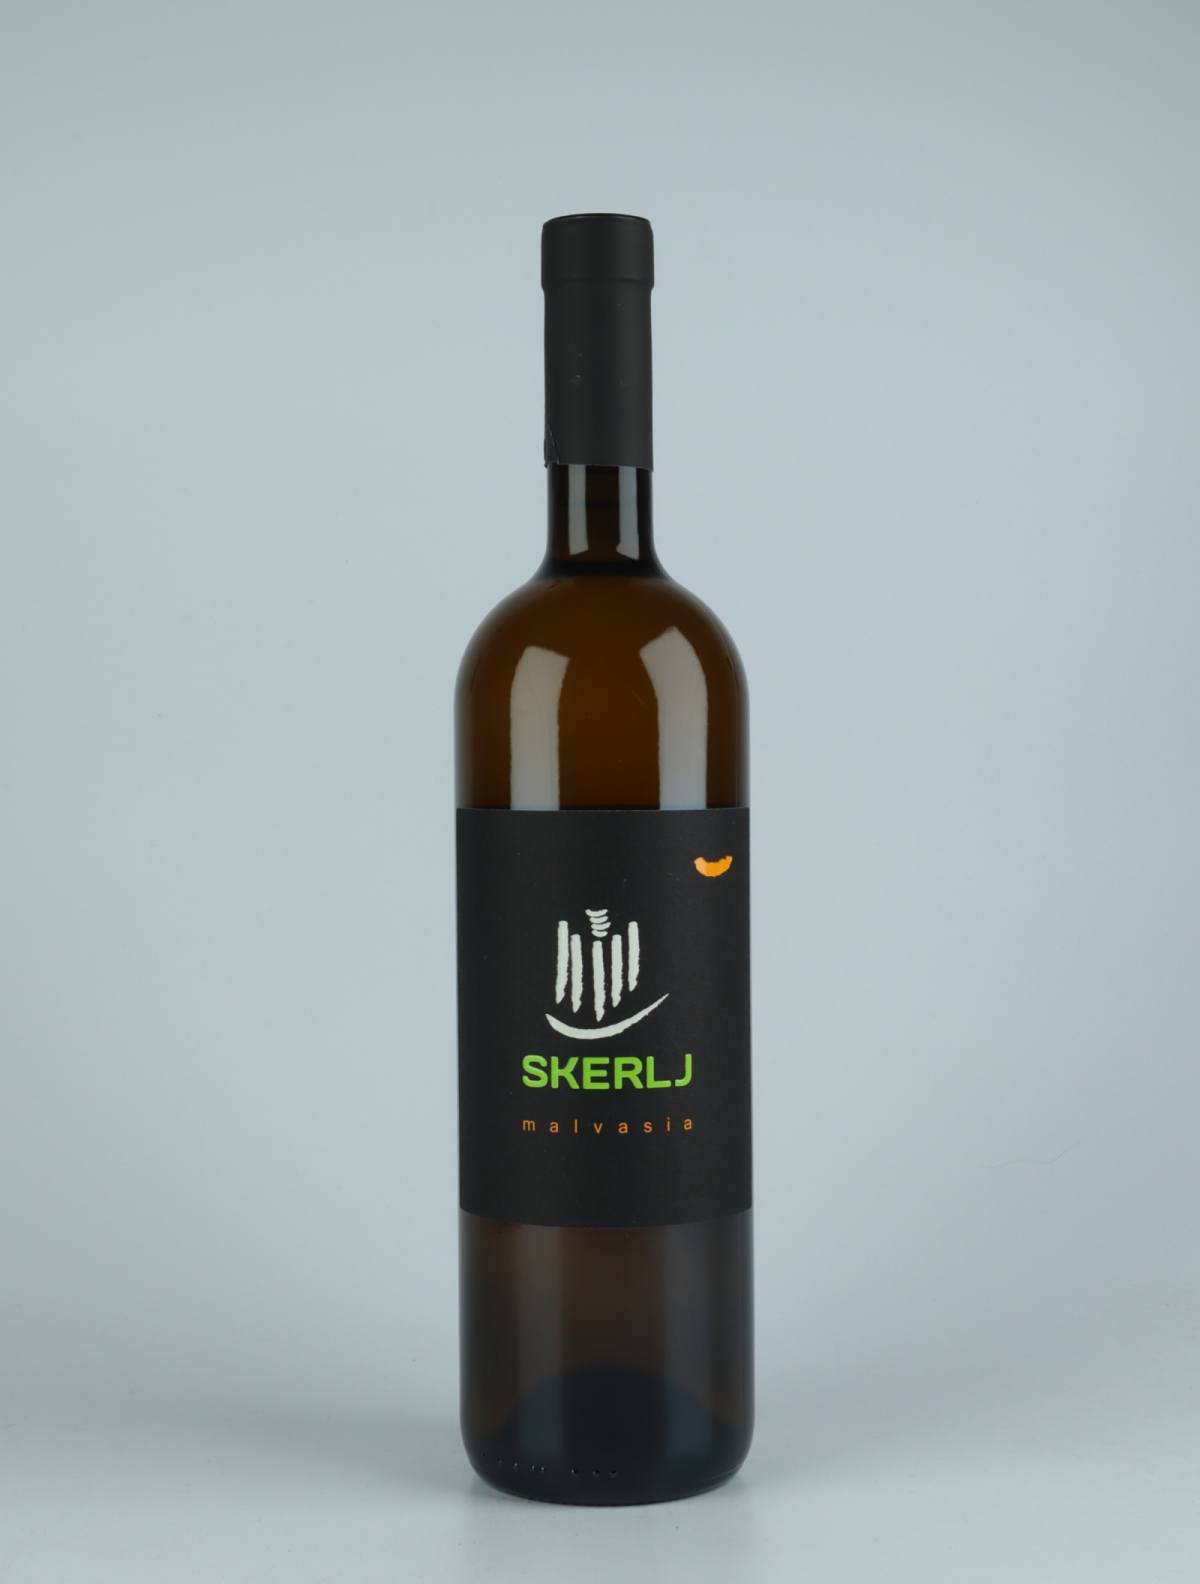 En flaske 2019 Malvasia Orange vin fra Skerlj, Friuli i Italien